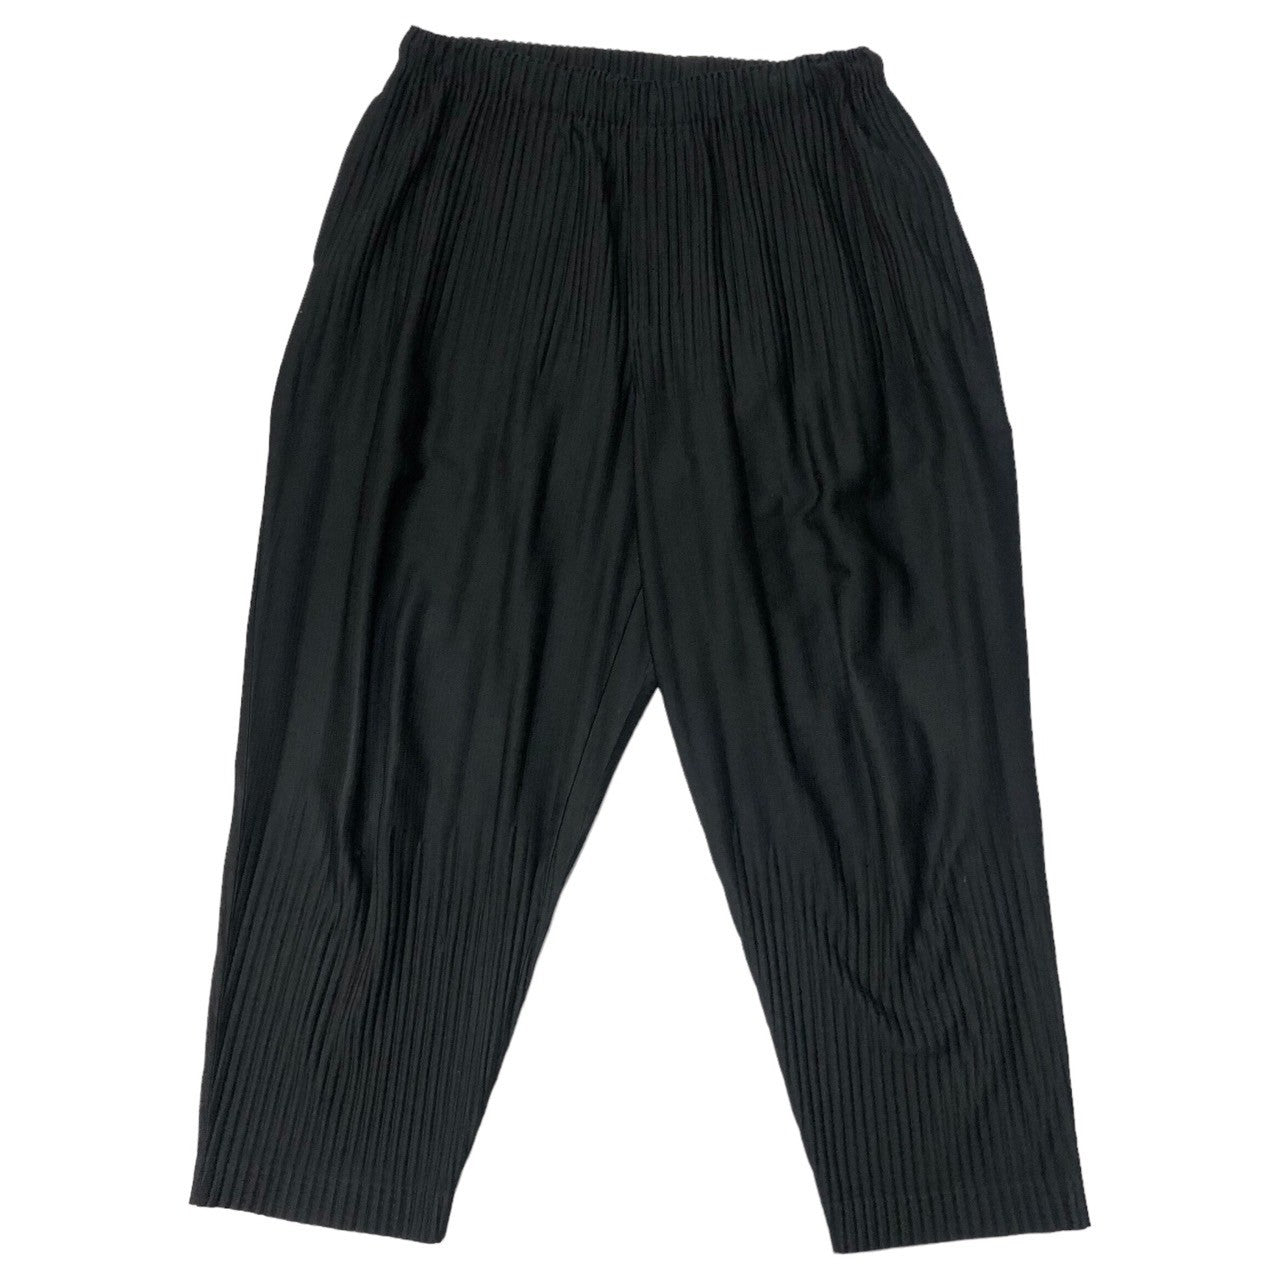 HOMME PLISSE ISSEY MIYAKE(オムプリッセイッセイミヤケ) Erased pleated full-length pants 消しプリーツ フルレングス パンツ HP55JF151 1(S程度) ブラック